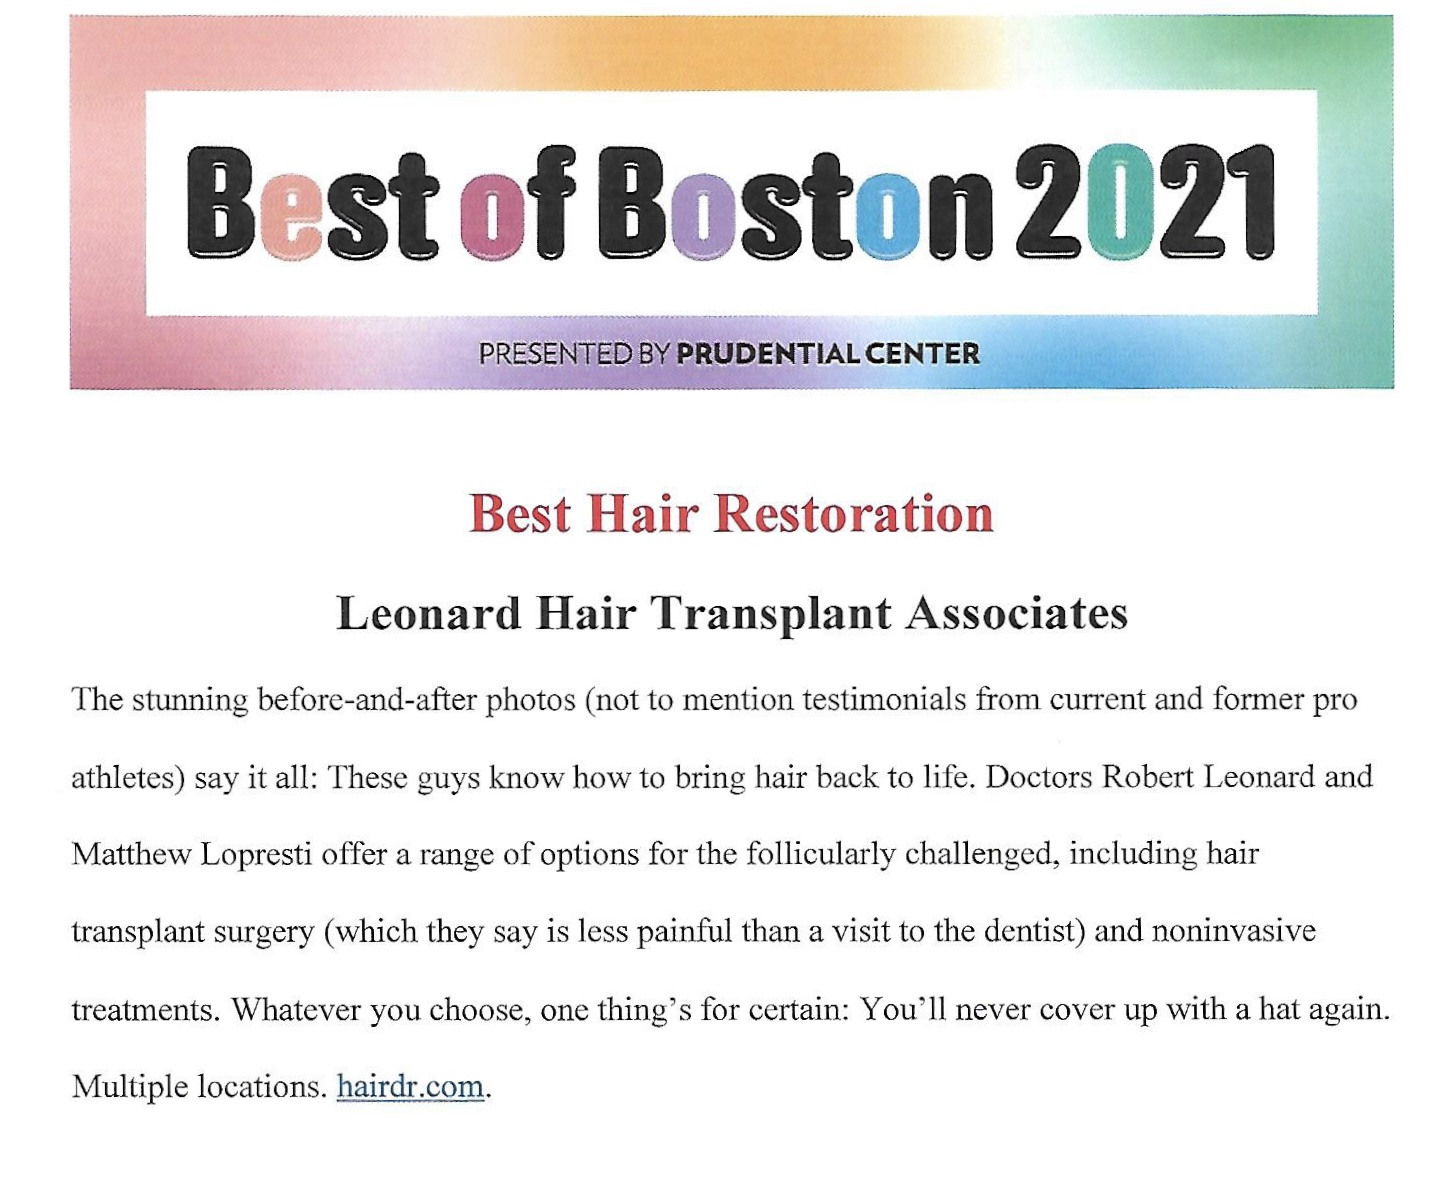 Boston Magazine Best of Boston 2021 “Best Hair Restoration”